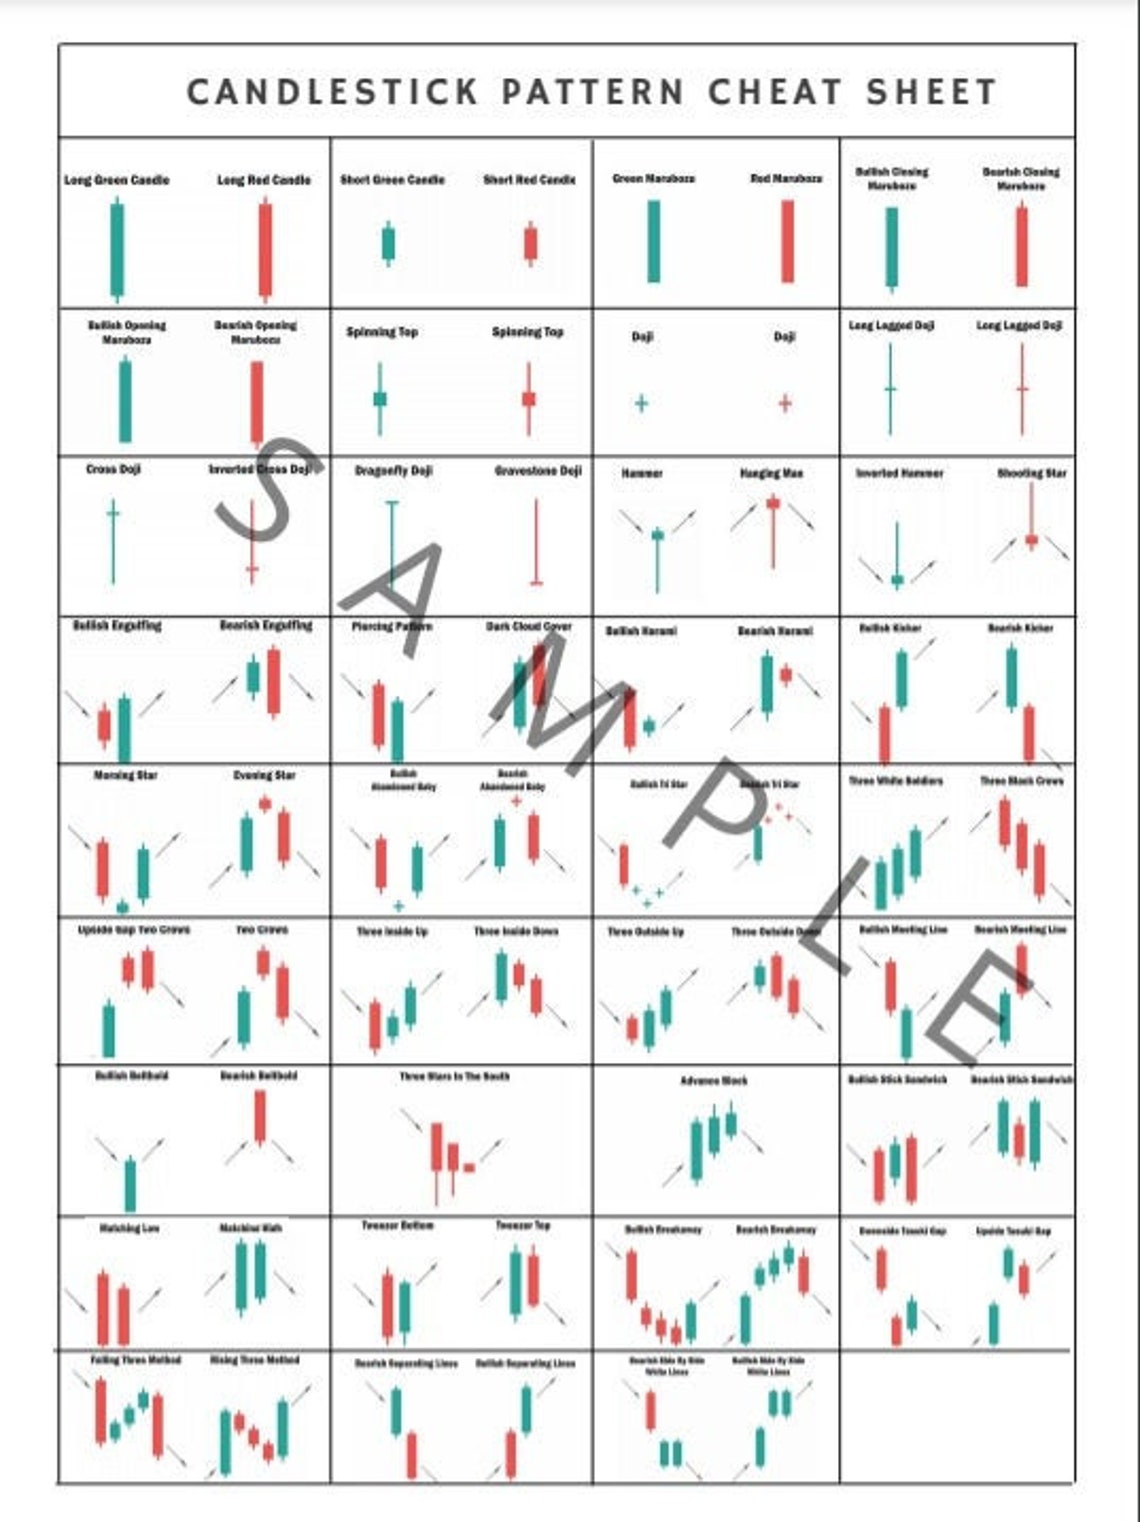 Continuation Candlestick Patterns Cheat Sheet